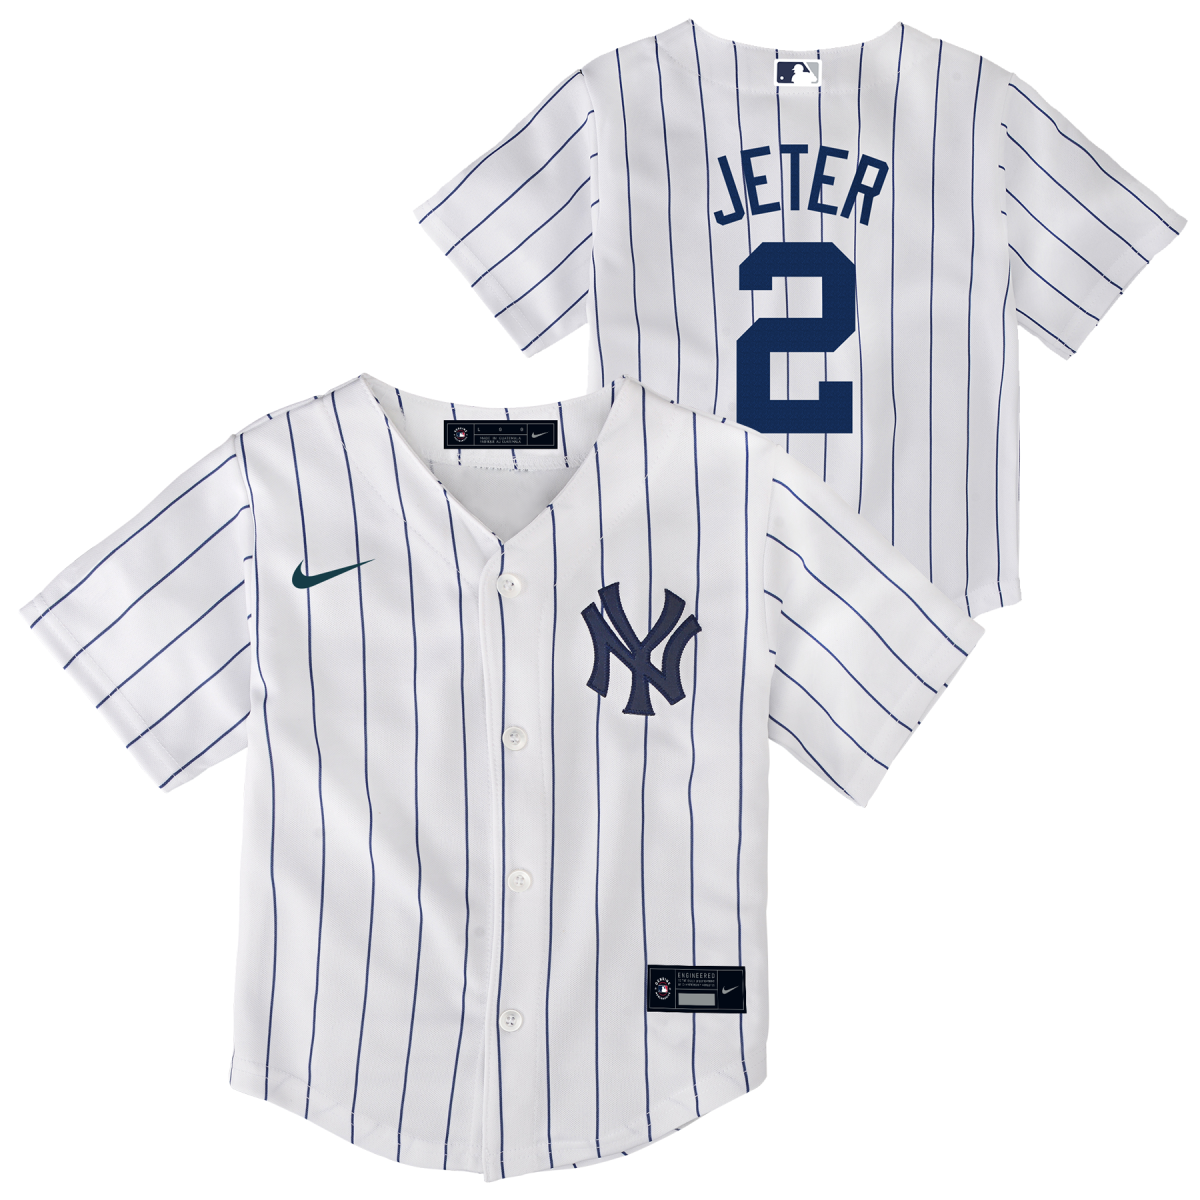 Genuine Adidas NY Yankees Jeter Baseball #2 JETER Youth Boy Jersey Large L  14-16